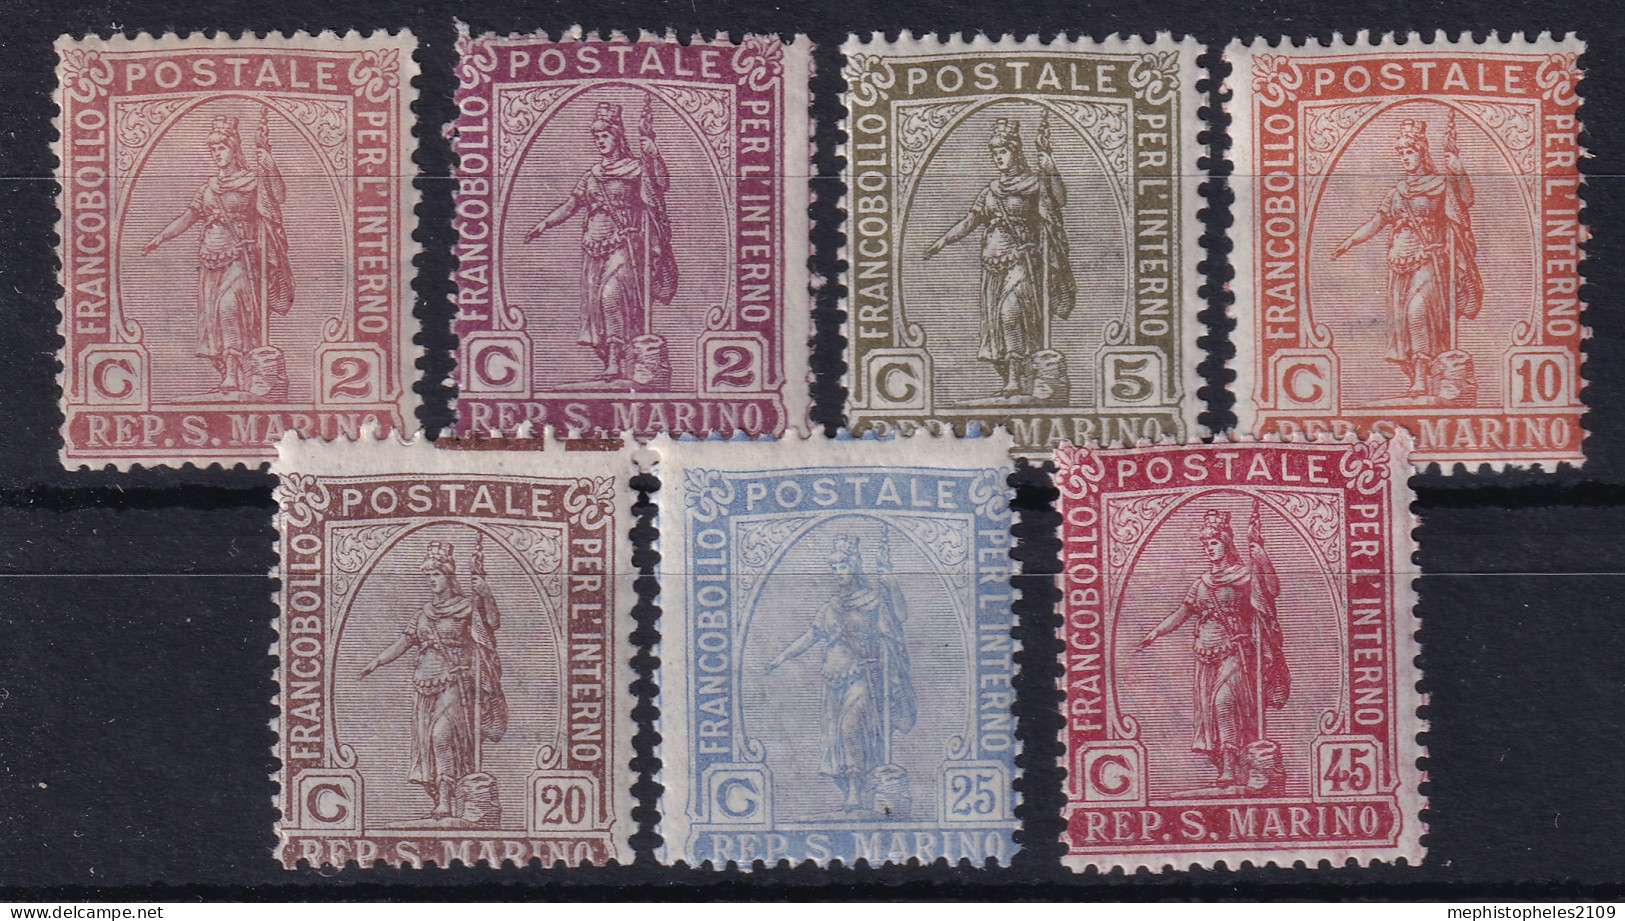 SAN MARINO 1899-1922 - MLH - Sc# 32-39 - Complete Set! - Unused Stamps